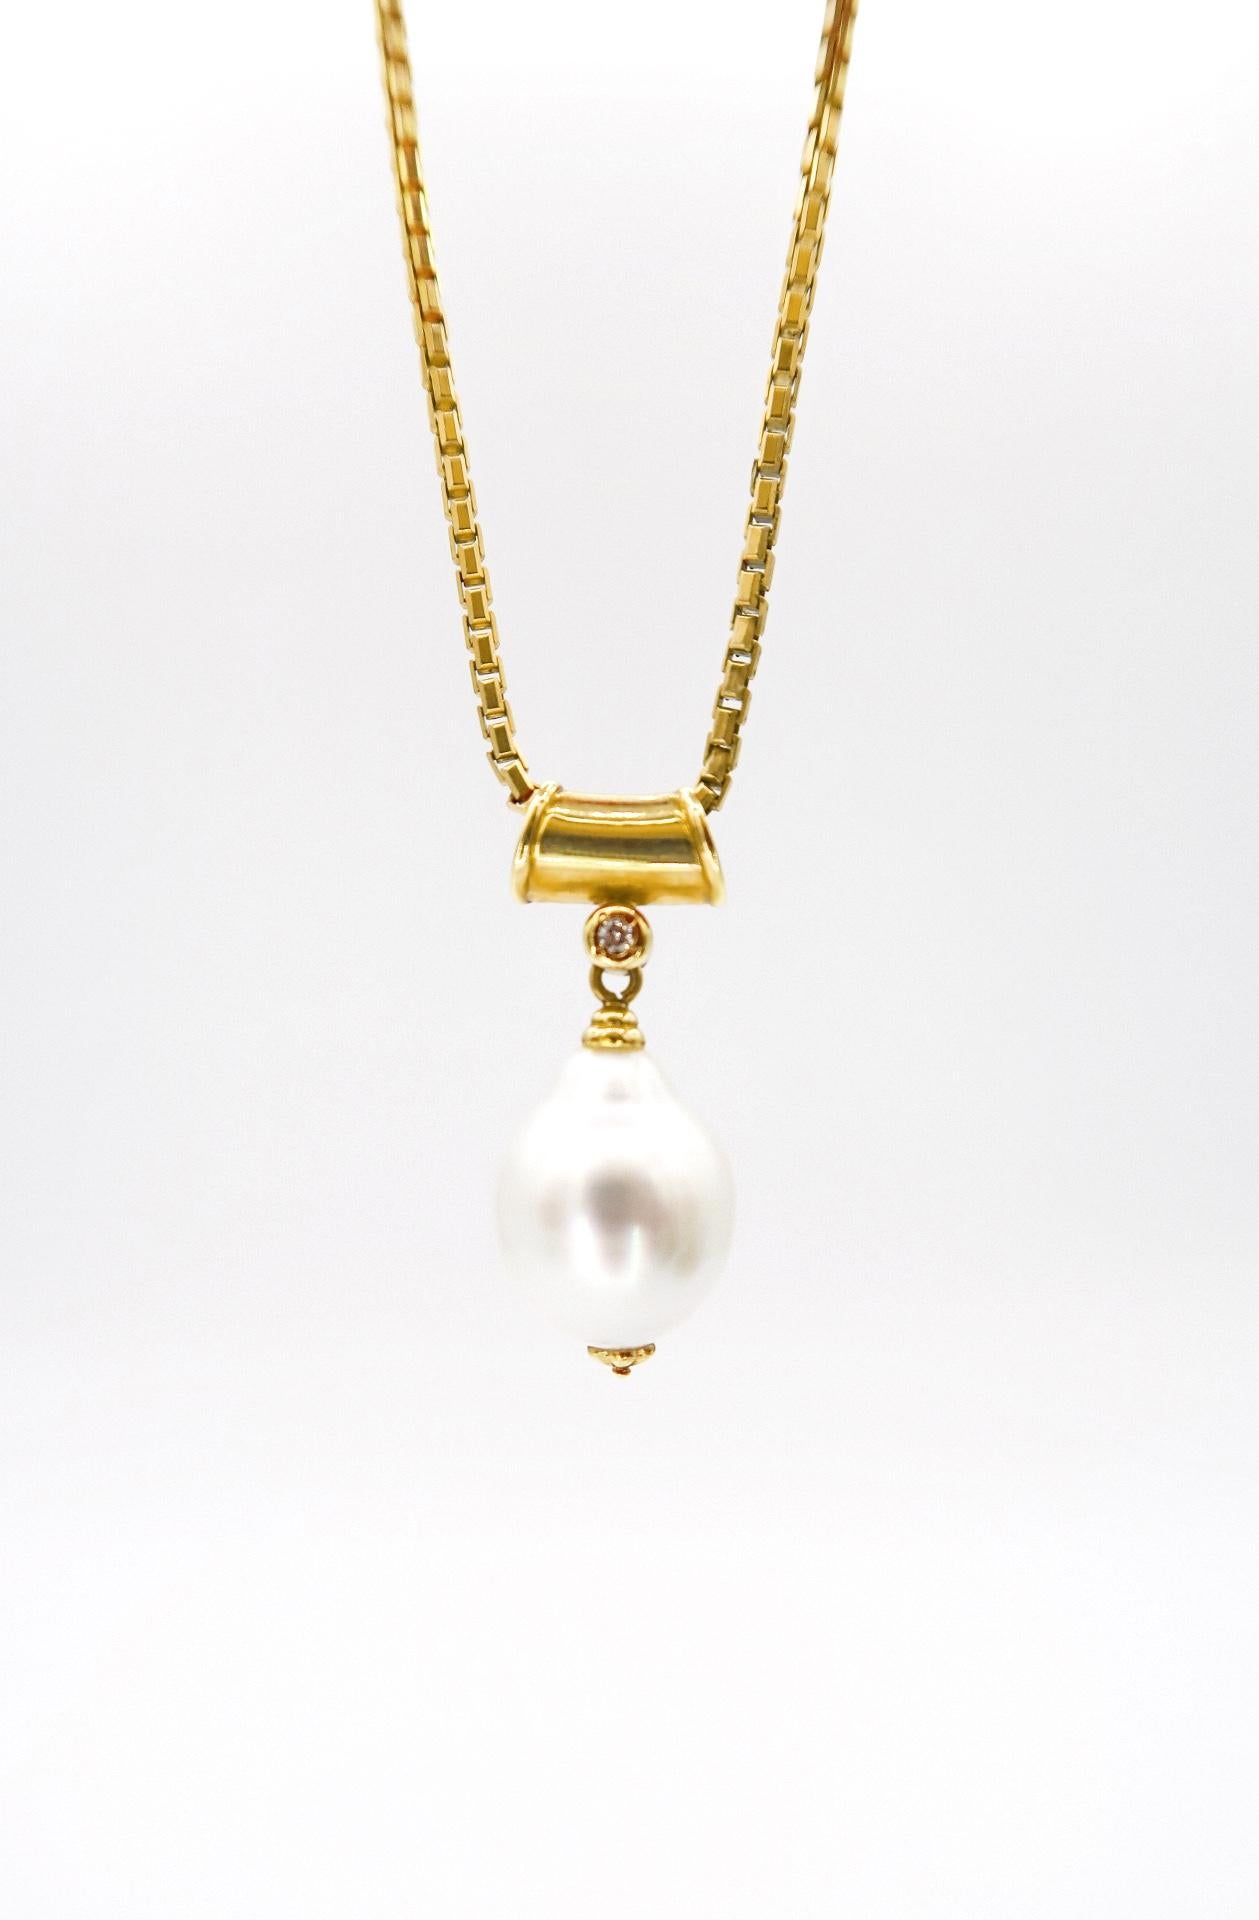 Brilliant Cut Drop Silvery White South Sea Pearl Diamond Pendant Necklace in 18K Yellow Gold For Sale